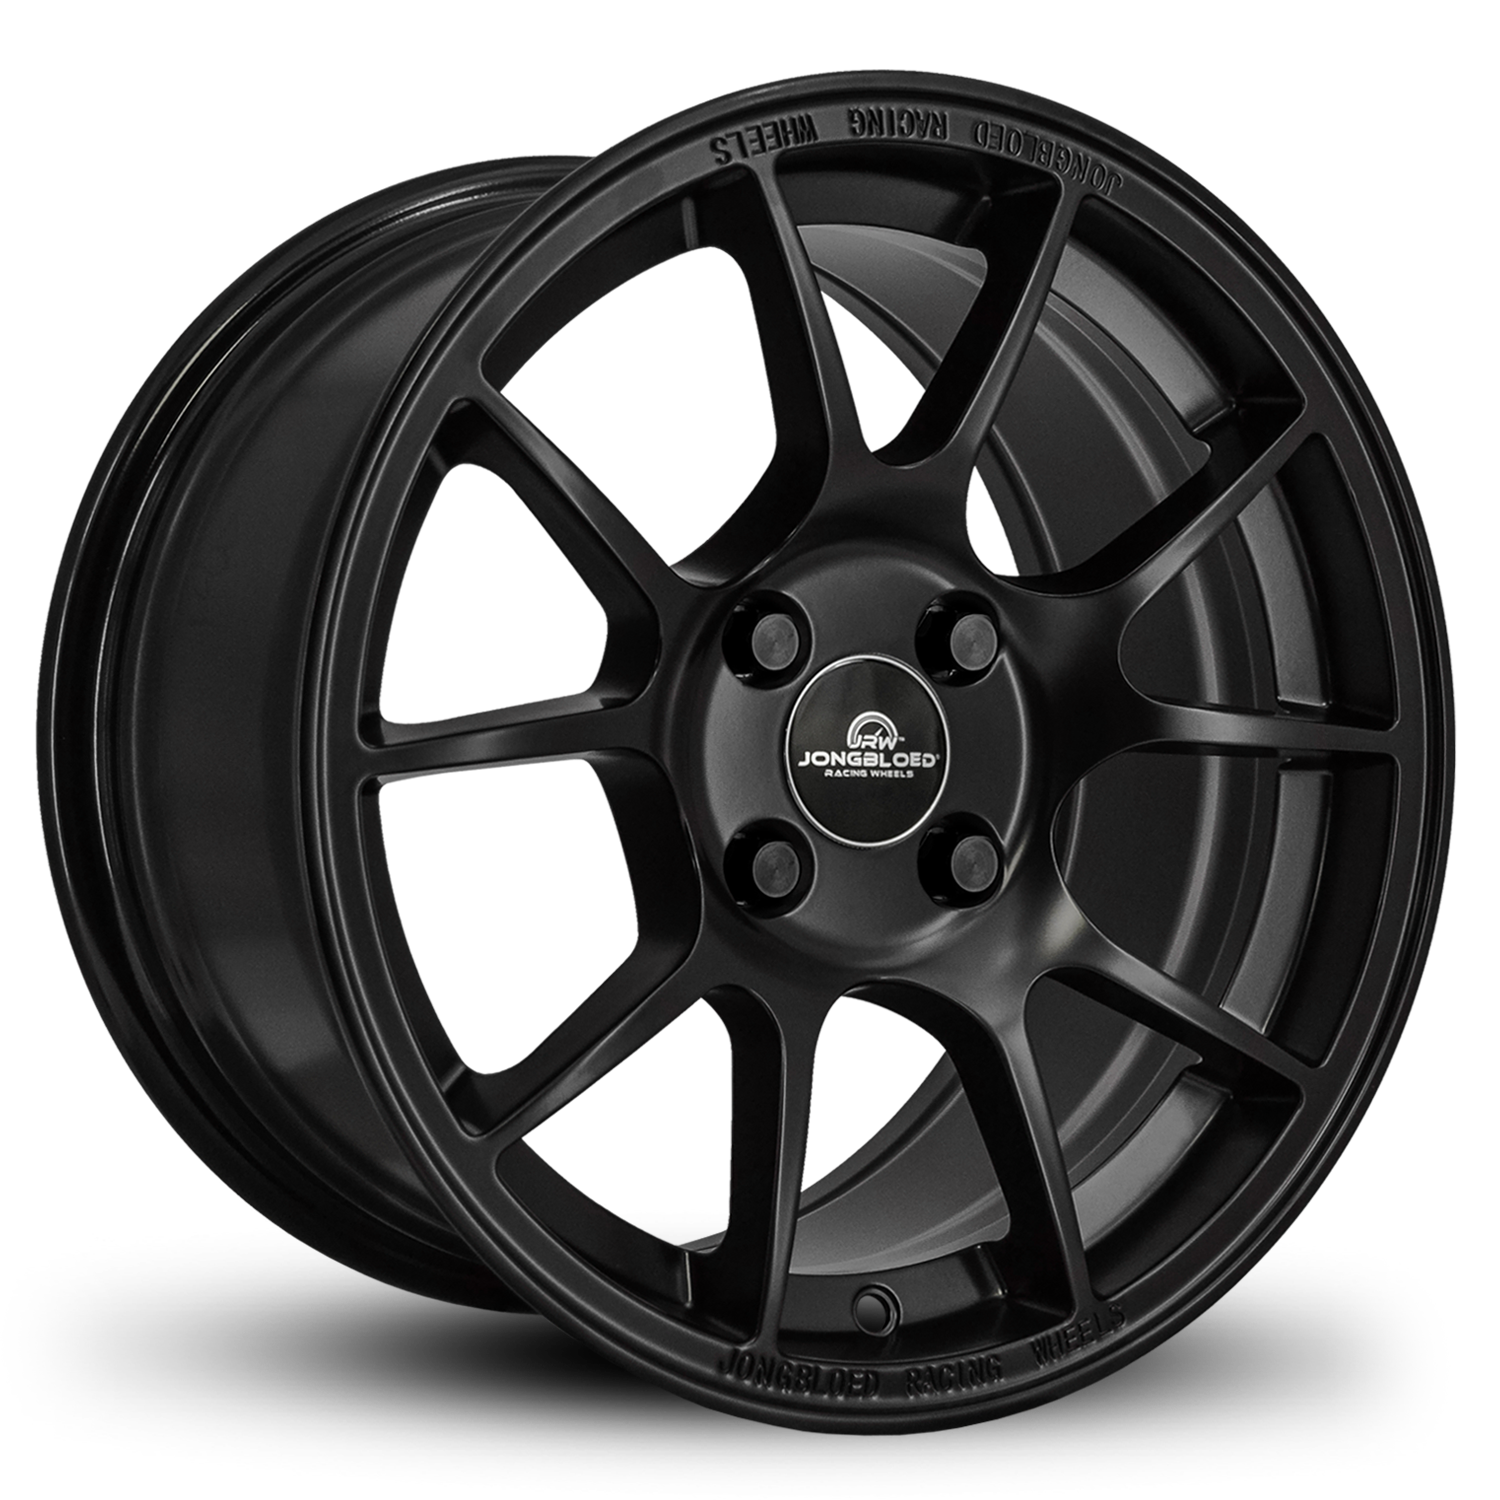 Jongbloed Racing Wheels Series 500 Flow Formed Racing Wheel Rims Mazda Miata & Porsche Boxster n All Satin Black